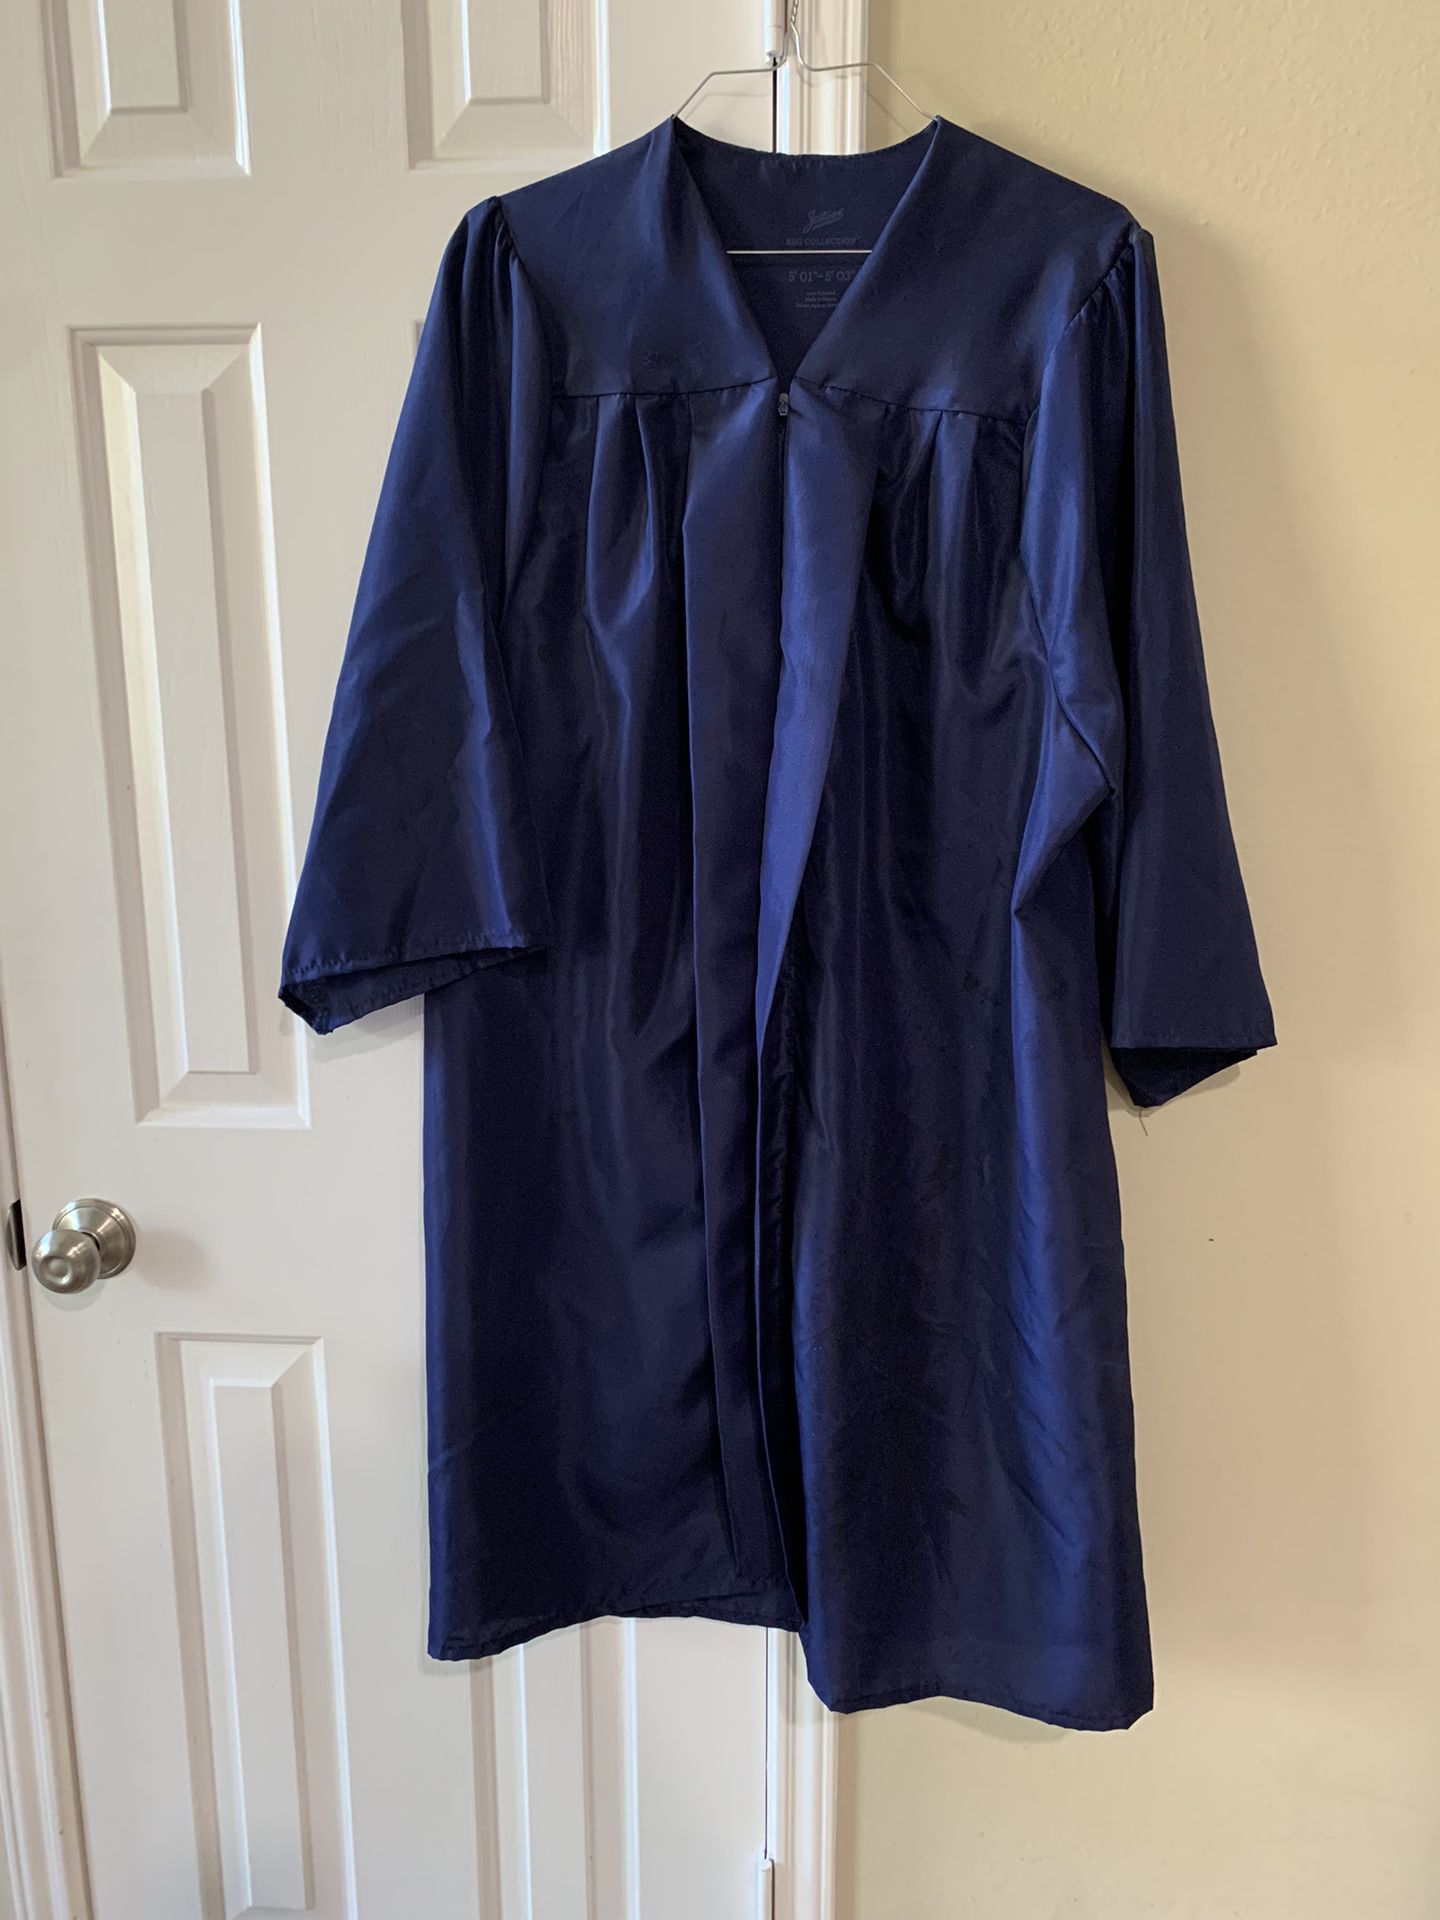 Josten’s Navy Blue Graduation Gown High School